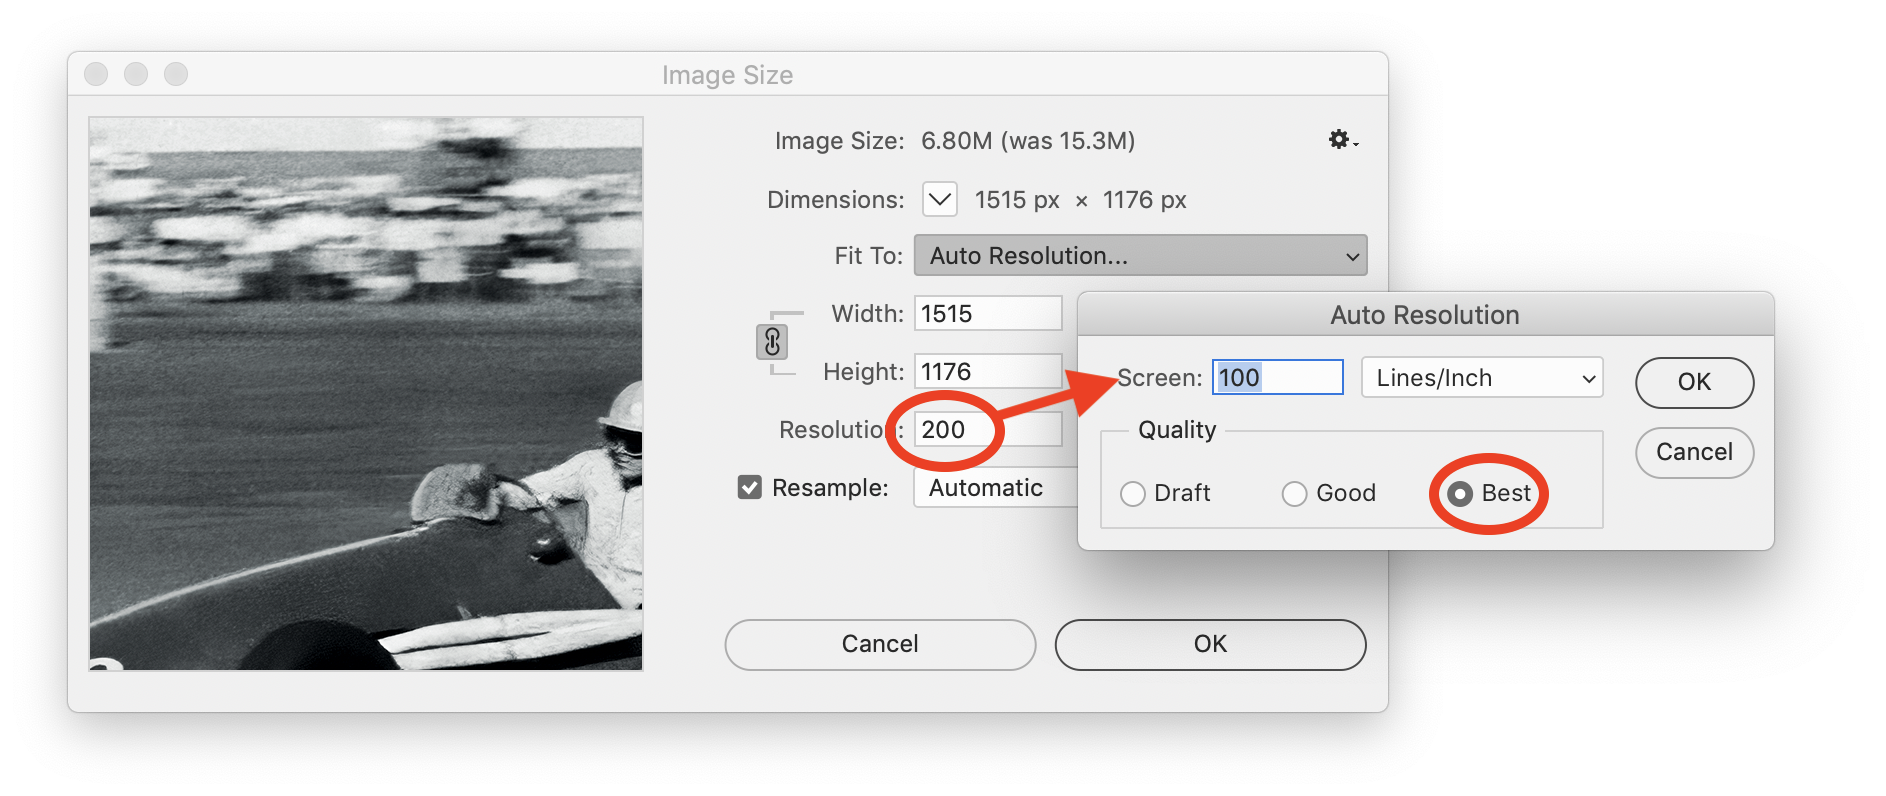 Adobe Photoshop’s Auto Resolution option